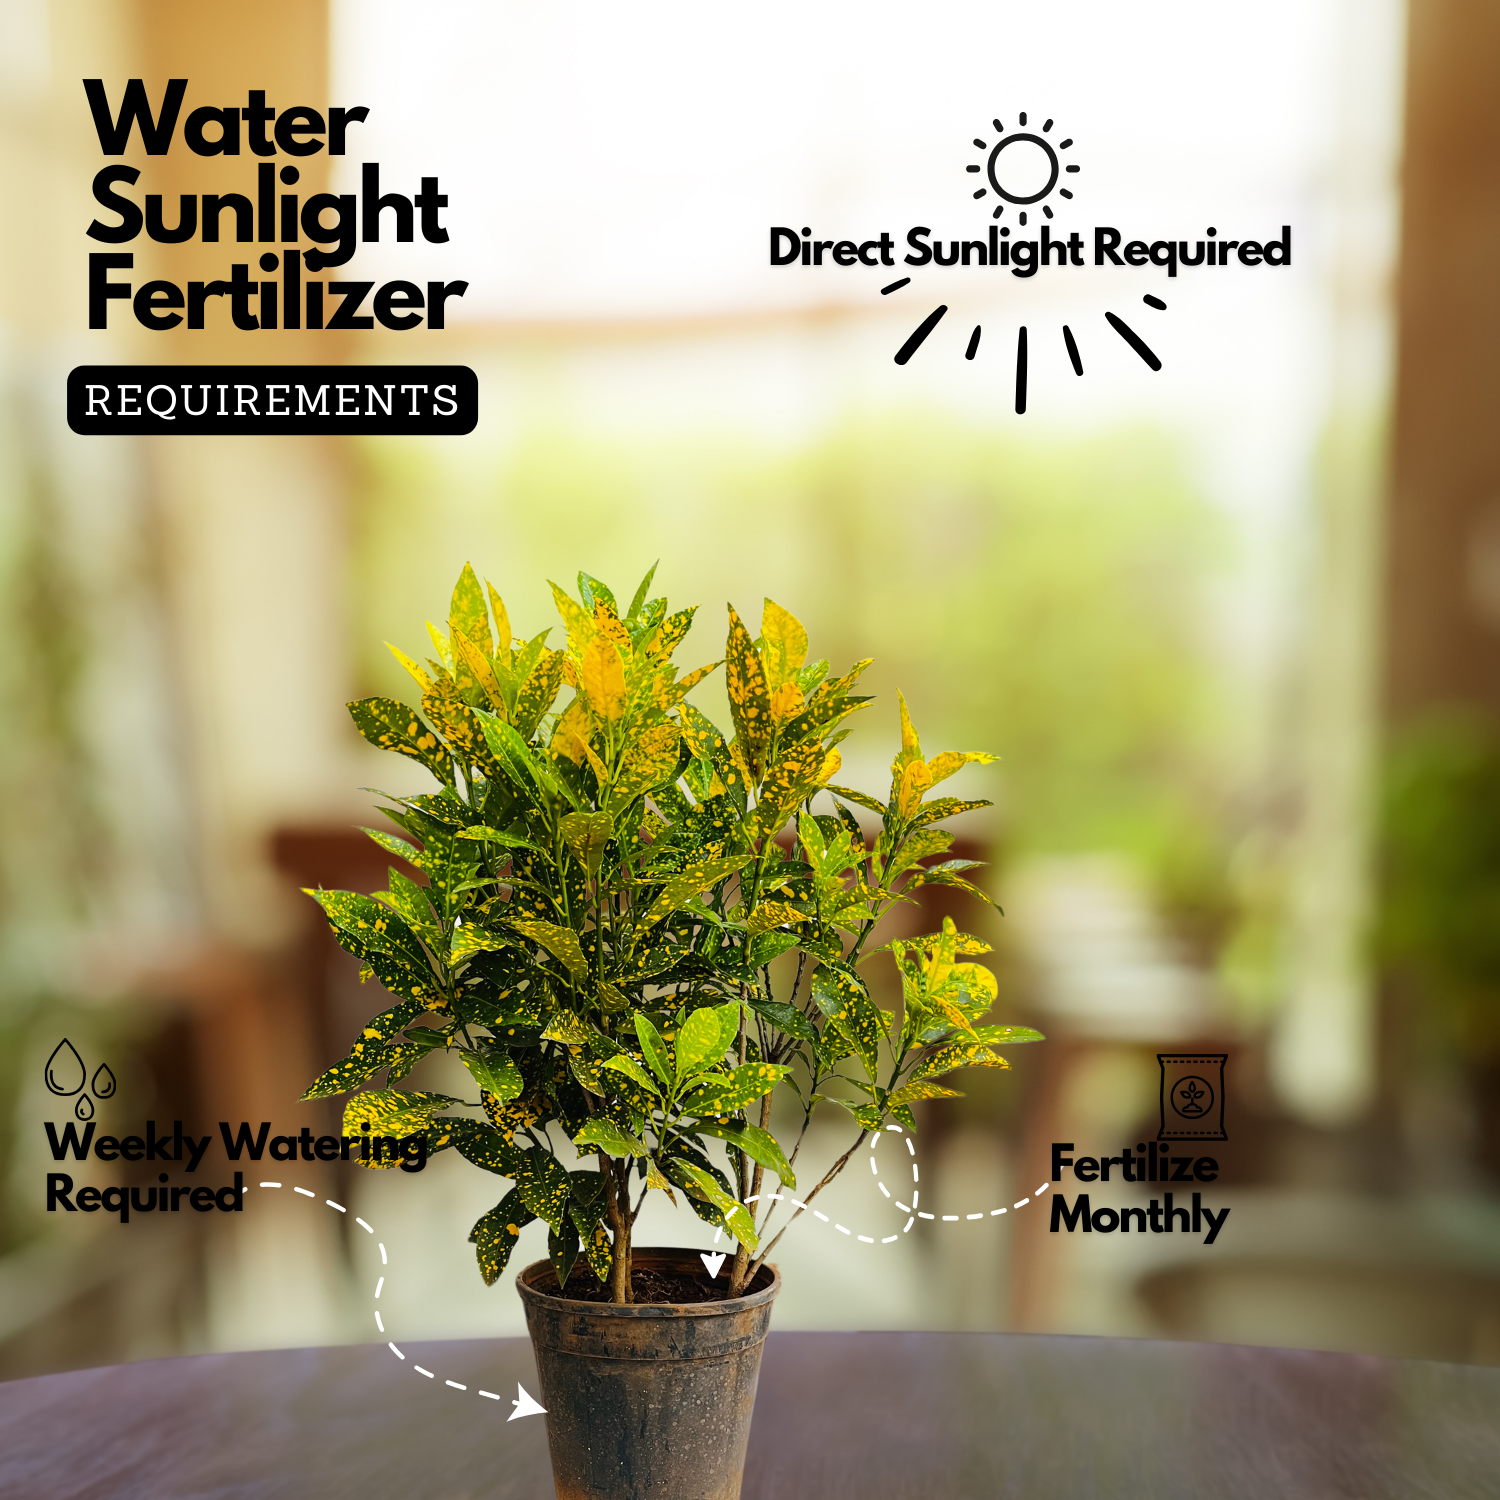 Gold Dust Croton / Codiaeum variegatum Ornamental Live Plant In Pot (Home & Garden)